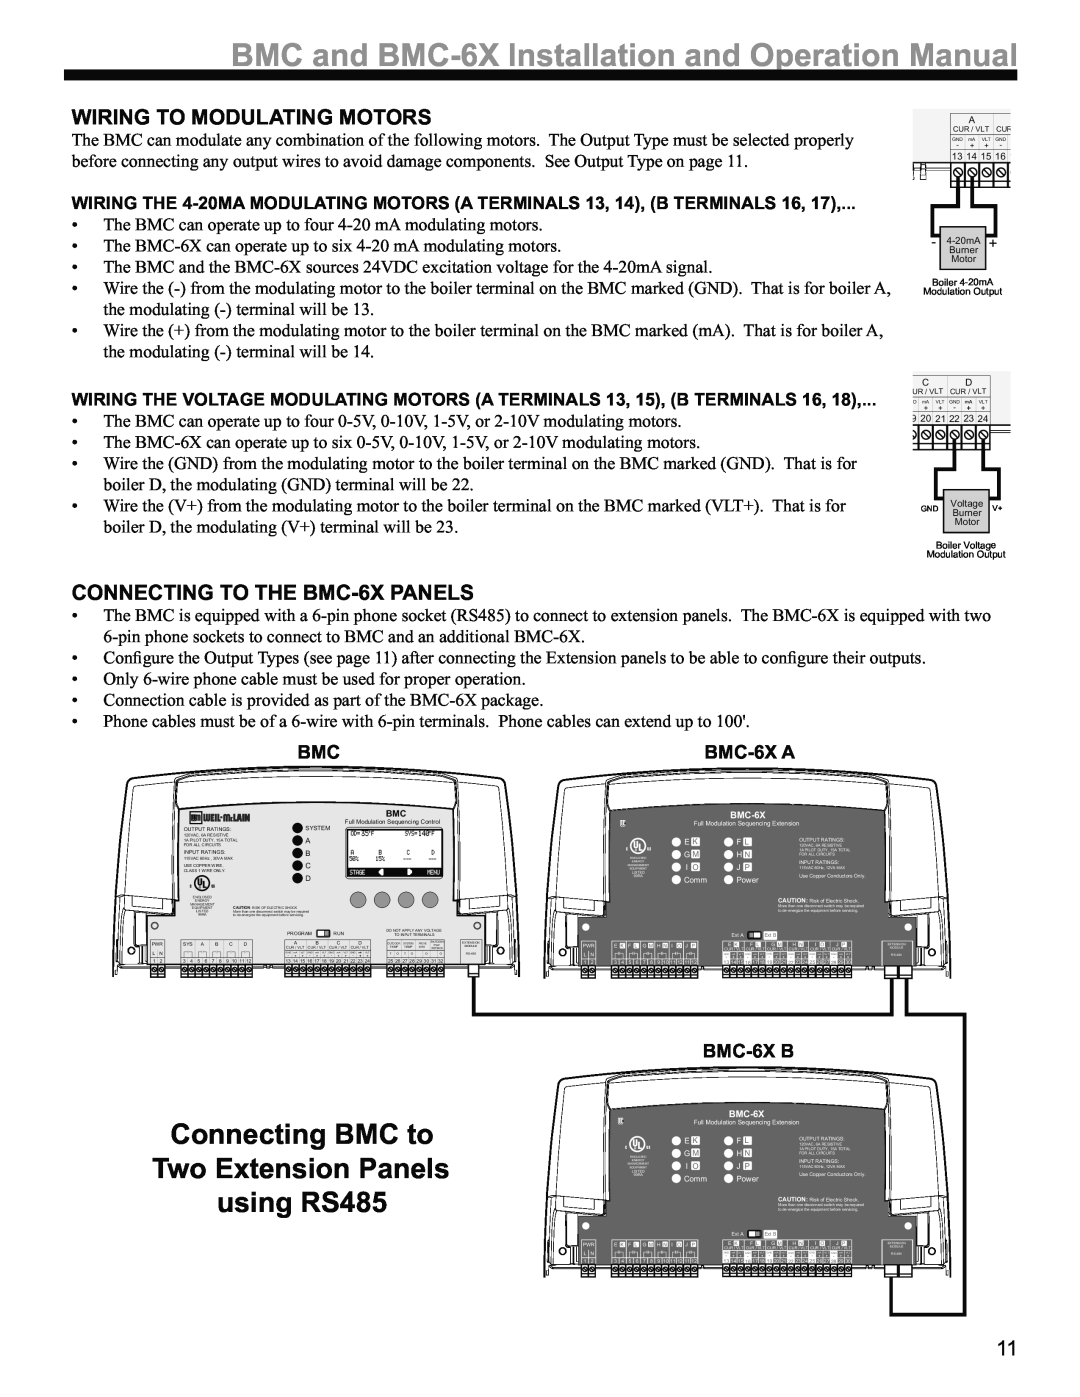 Weil-McLain operation manual Wiring To Modulating Motors, CONNECTING TO THE BMC-6XPANELS, BMC-6XA, BMC-6XB 